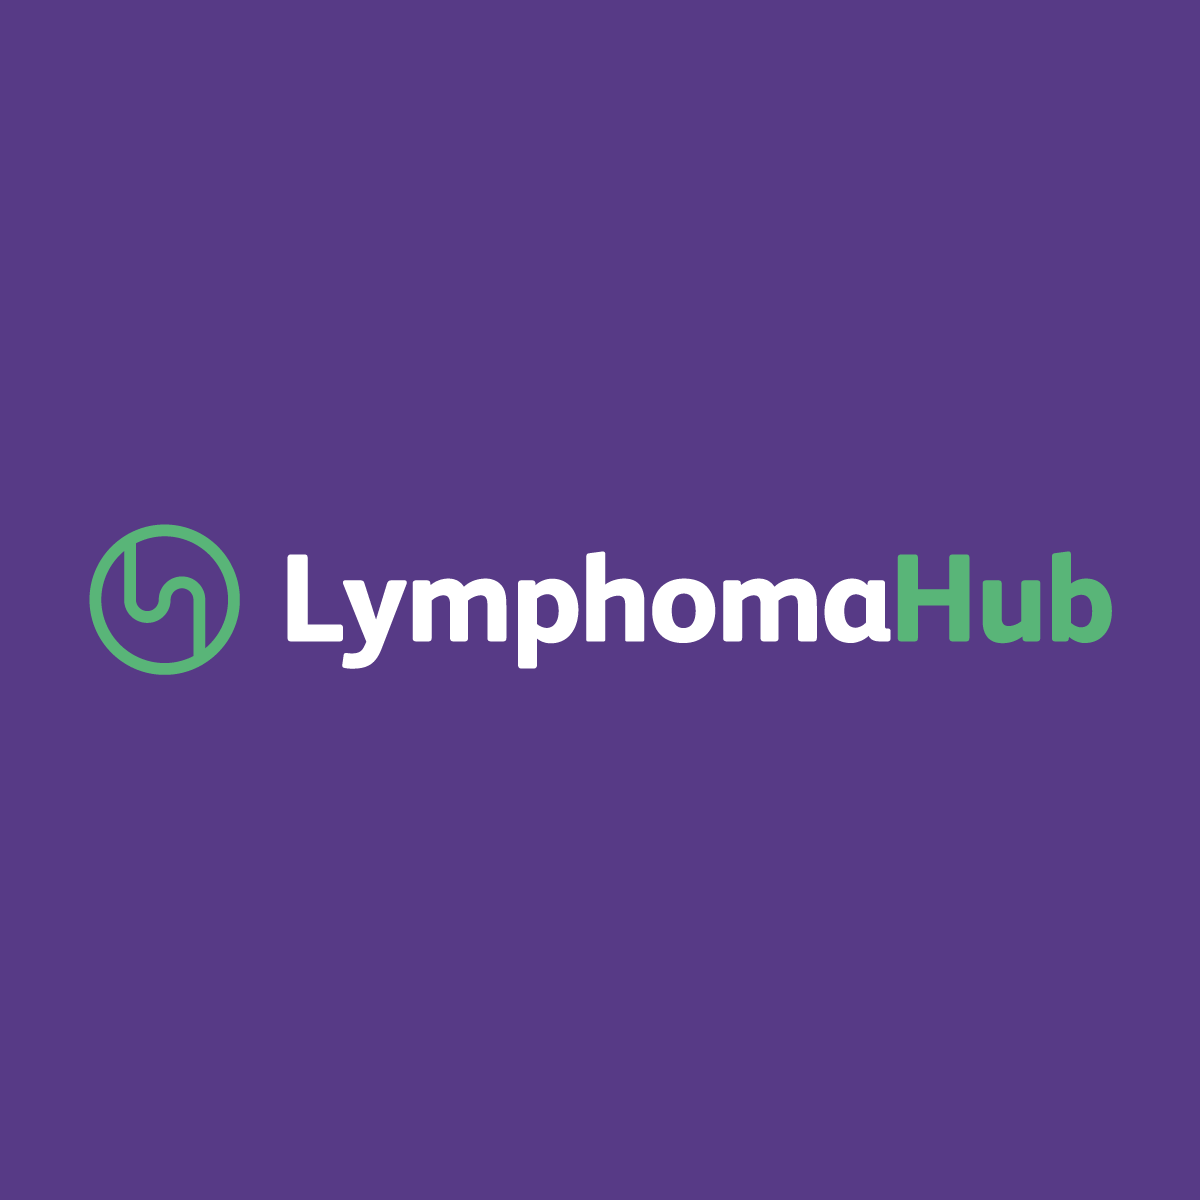 (c) Lymphomahub.com